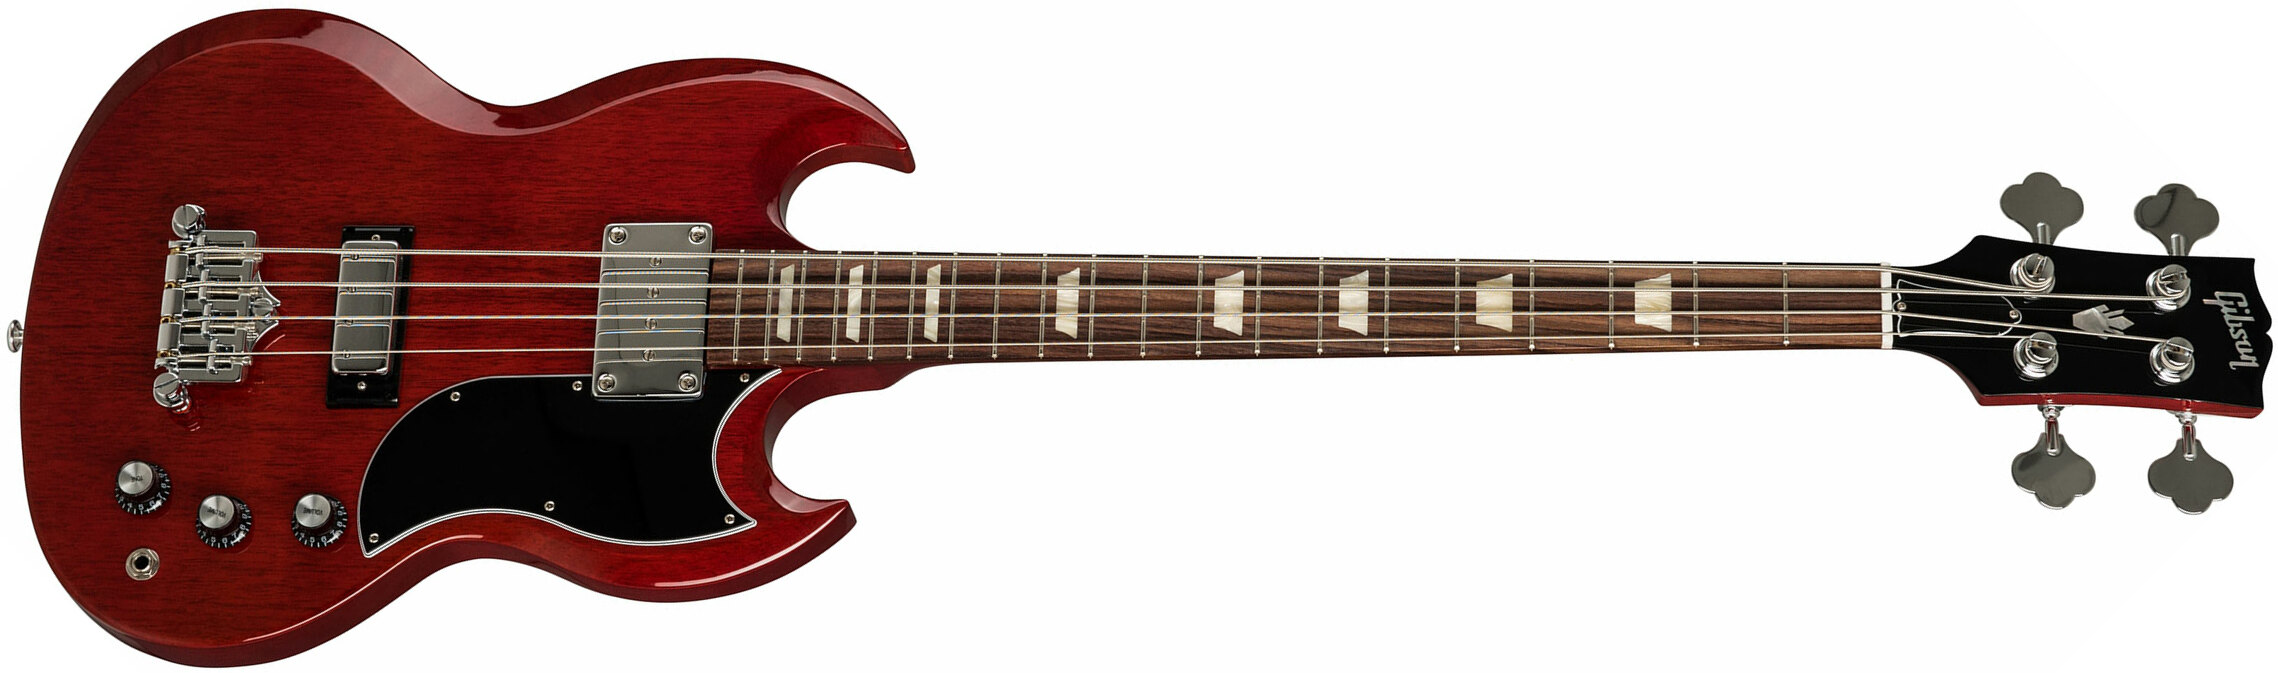 Gibson Sg Standard Bass - Heritage Cherry - Bajo eléctrico de cuerpo sólido - Main picture